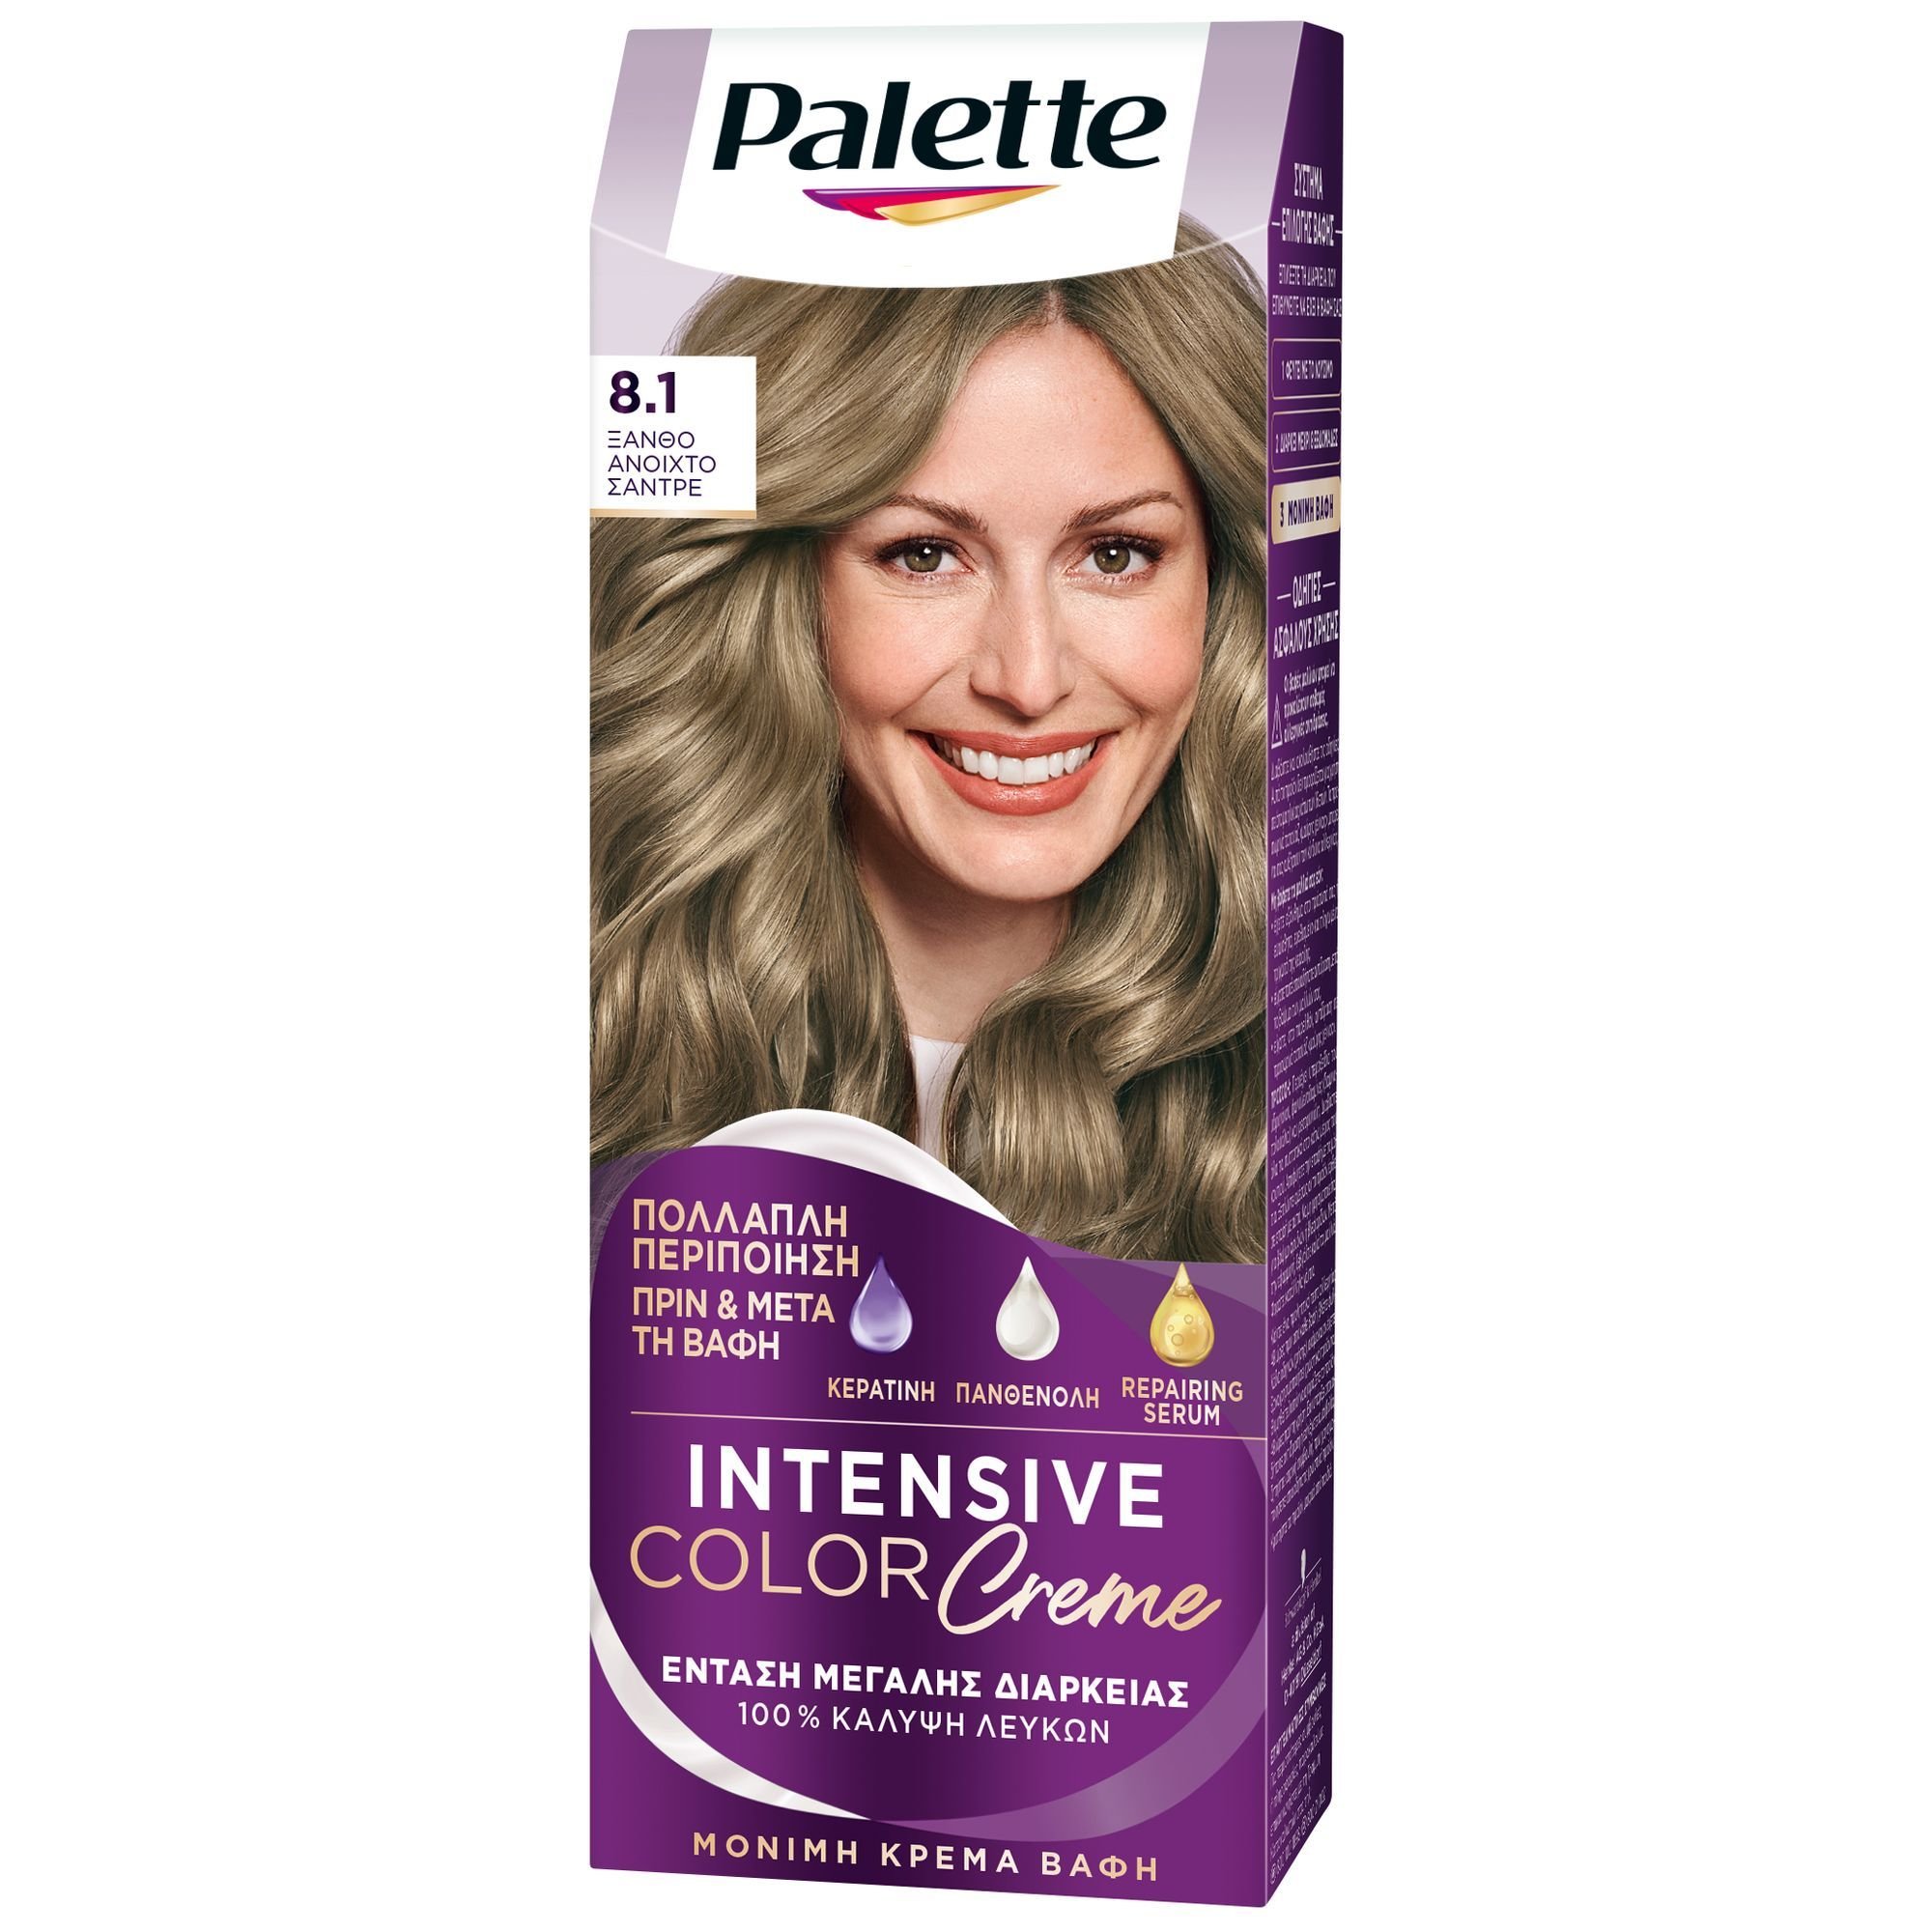 Schwarzkopf Palette Intensive Hair Color Creme Kit Μόνιμη Κρέμα Βαφή Μαλλιών για Έντονο Χρώμα Μεγάλης Διάρκειας & Περιποίηση 1 Τεμάχιο – 8.1 Ξανθό Ανοιχτό Σαντρέ